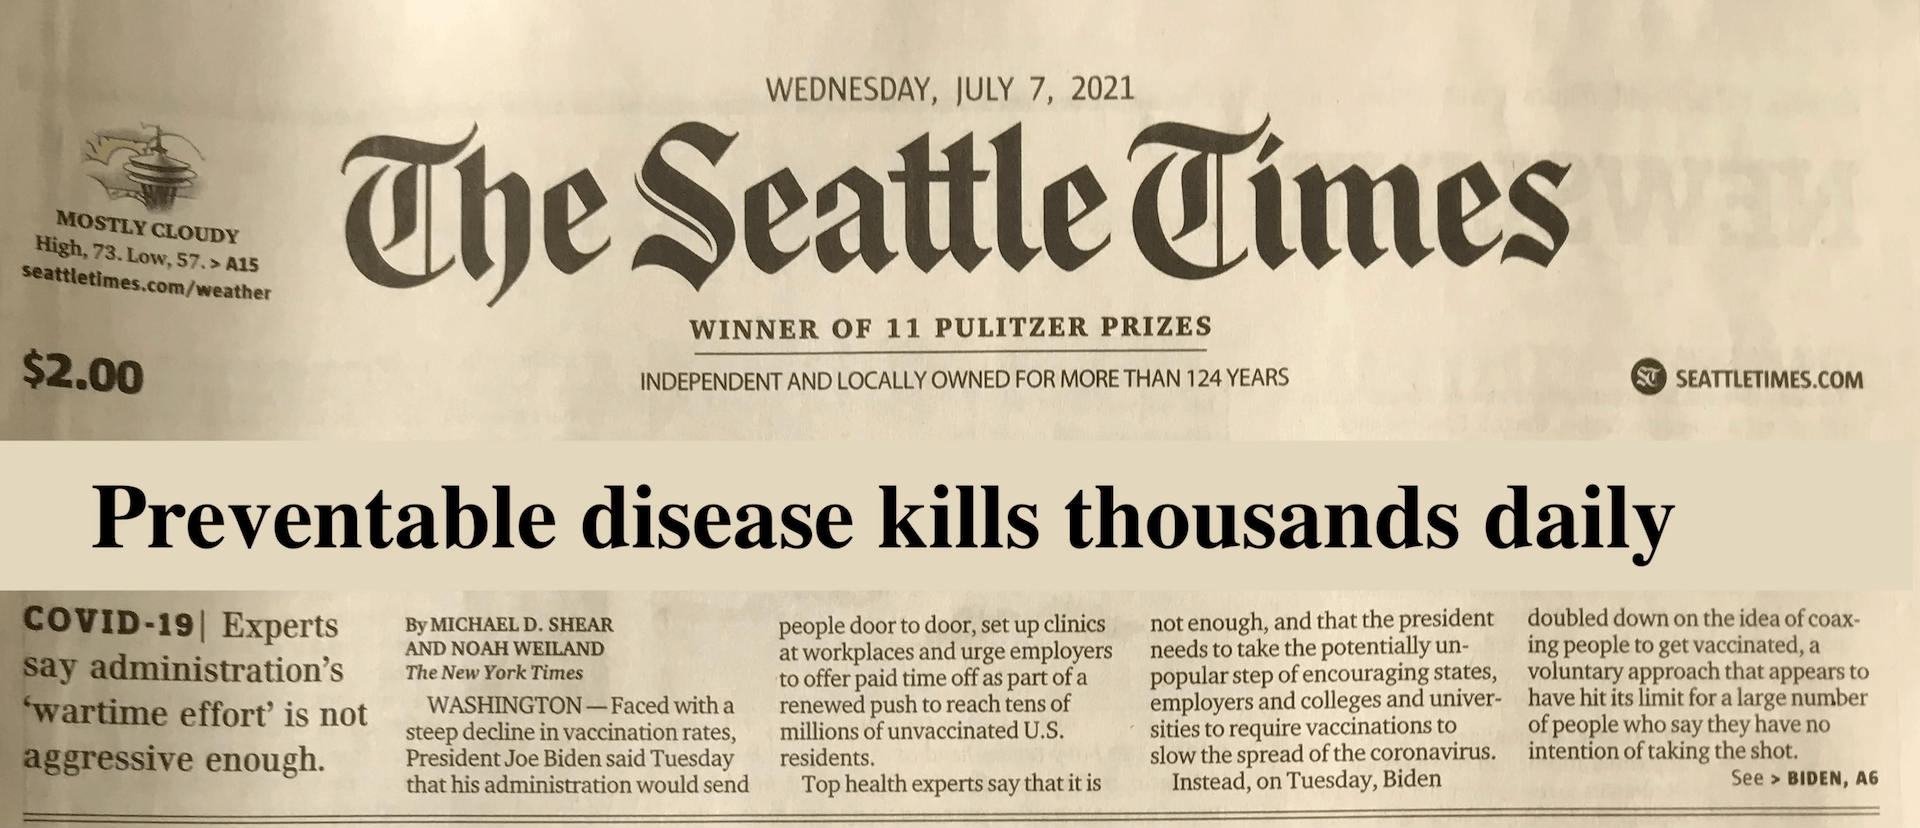 Preventable disease kills thousands daily